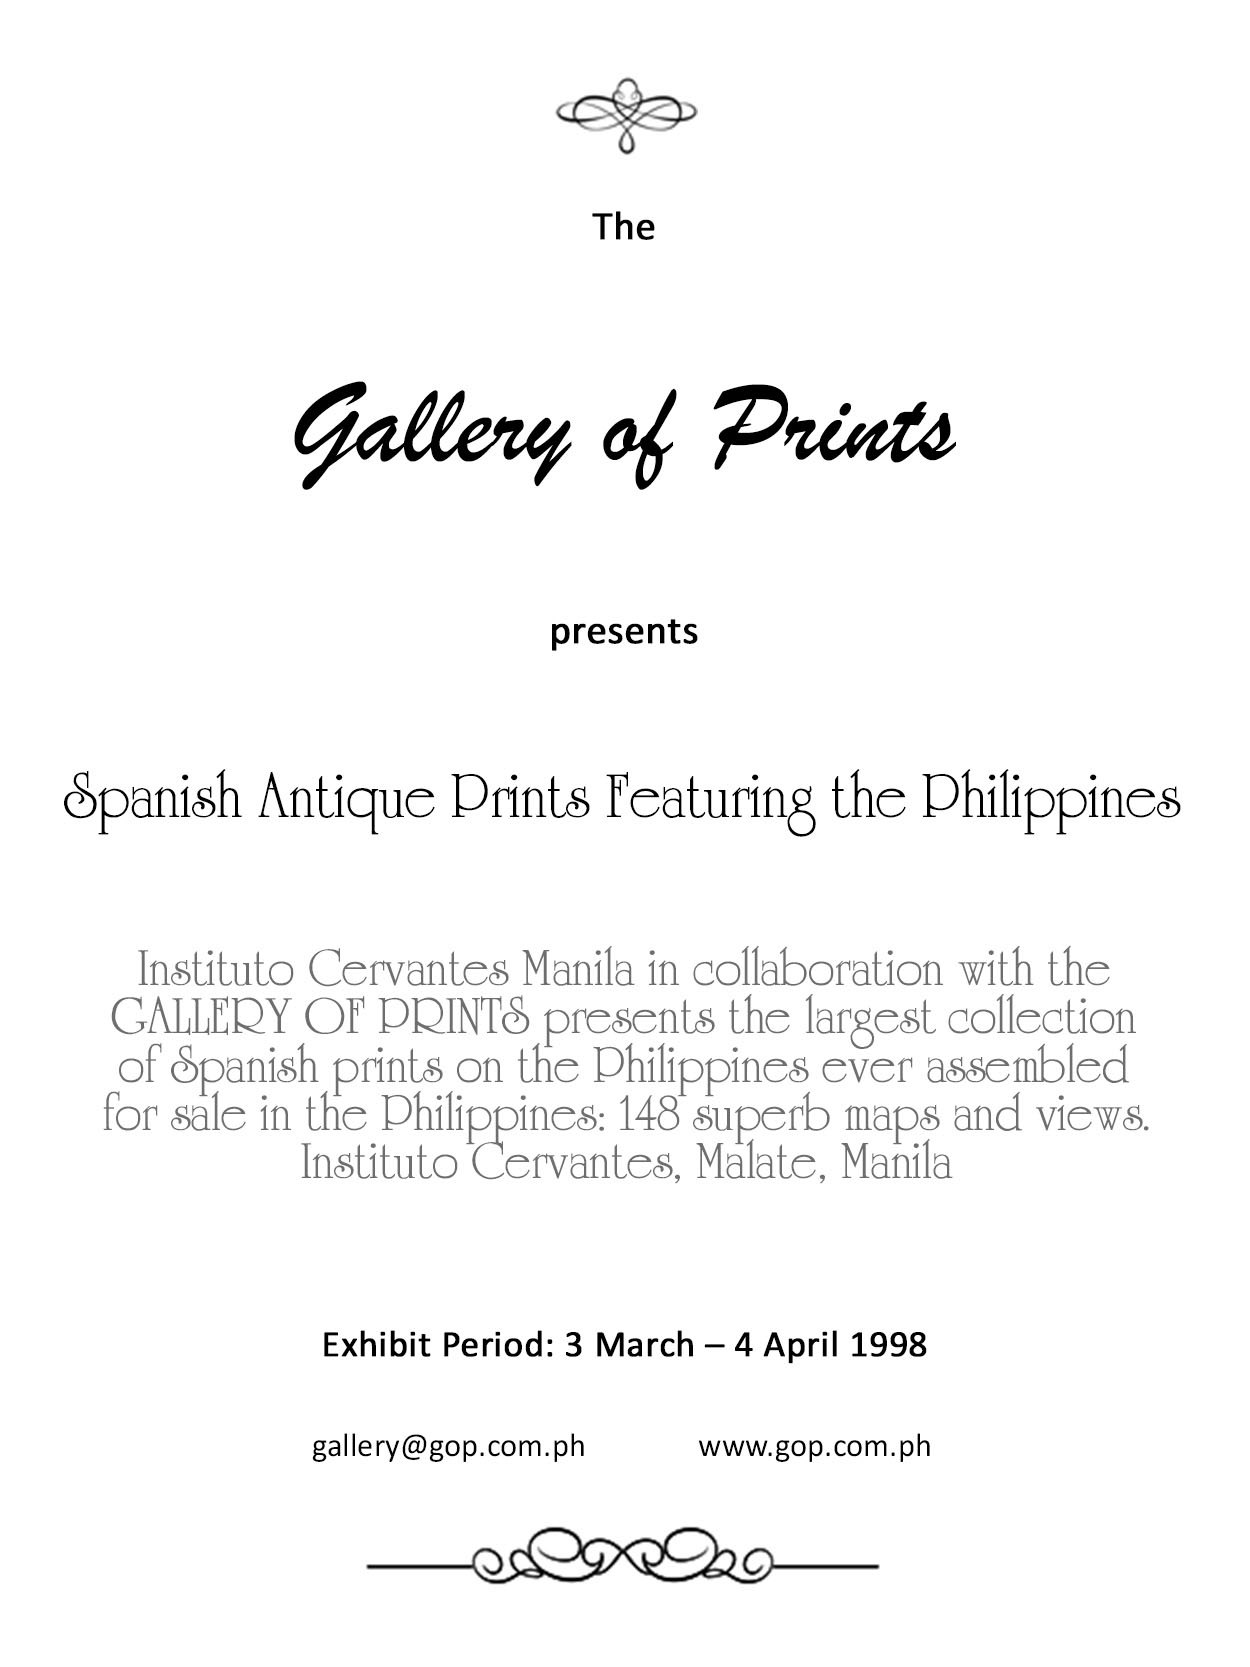 Spanish Antique Prints Featuring the Philippines